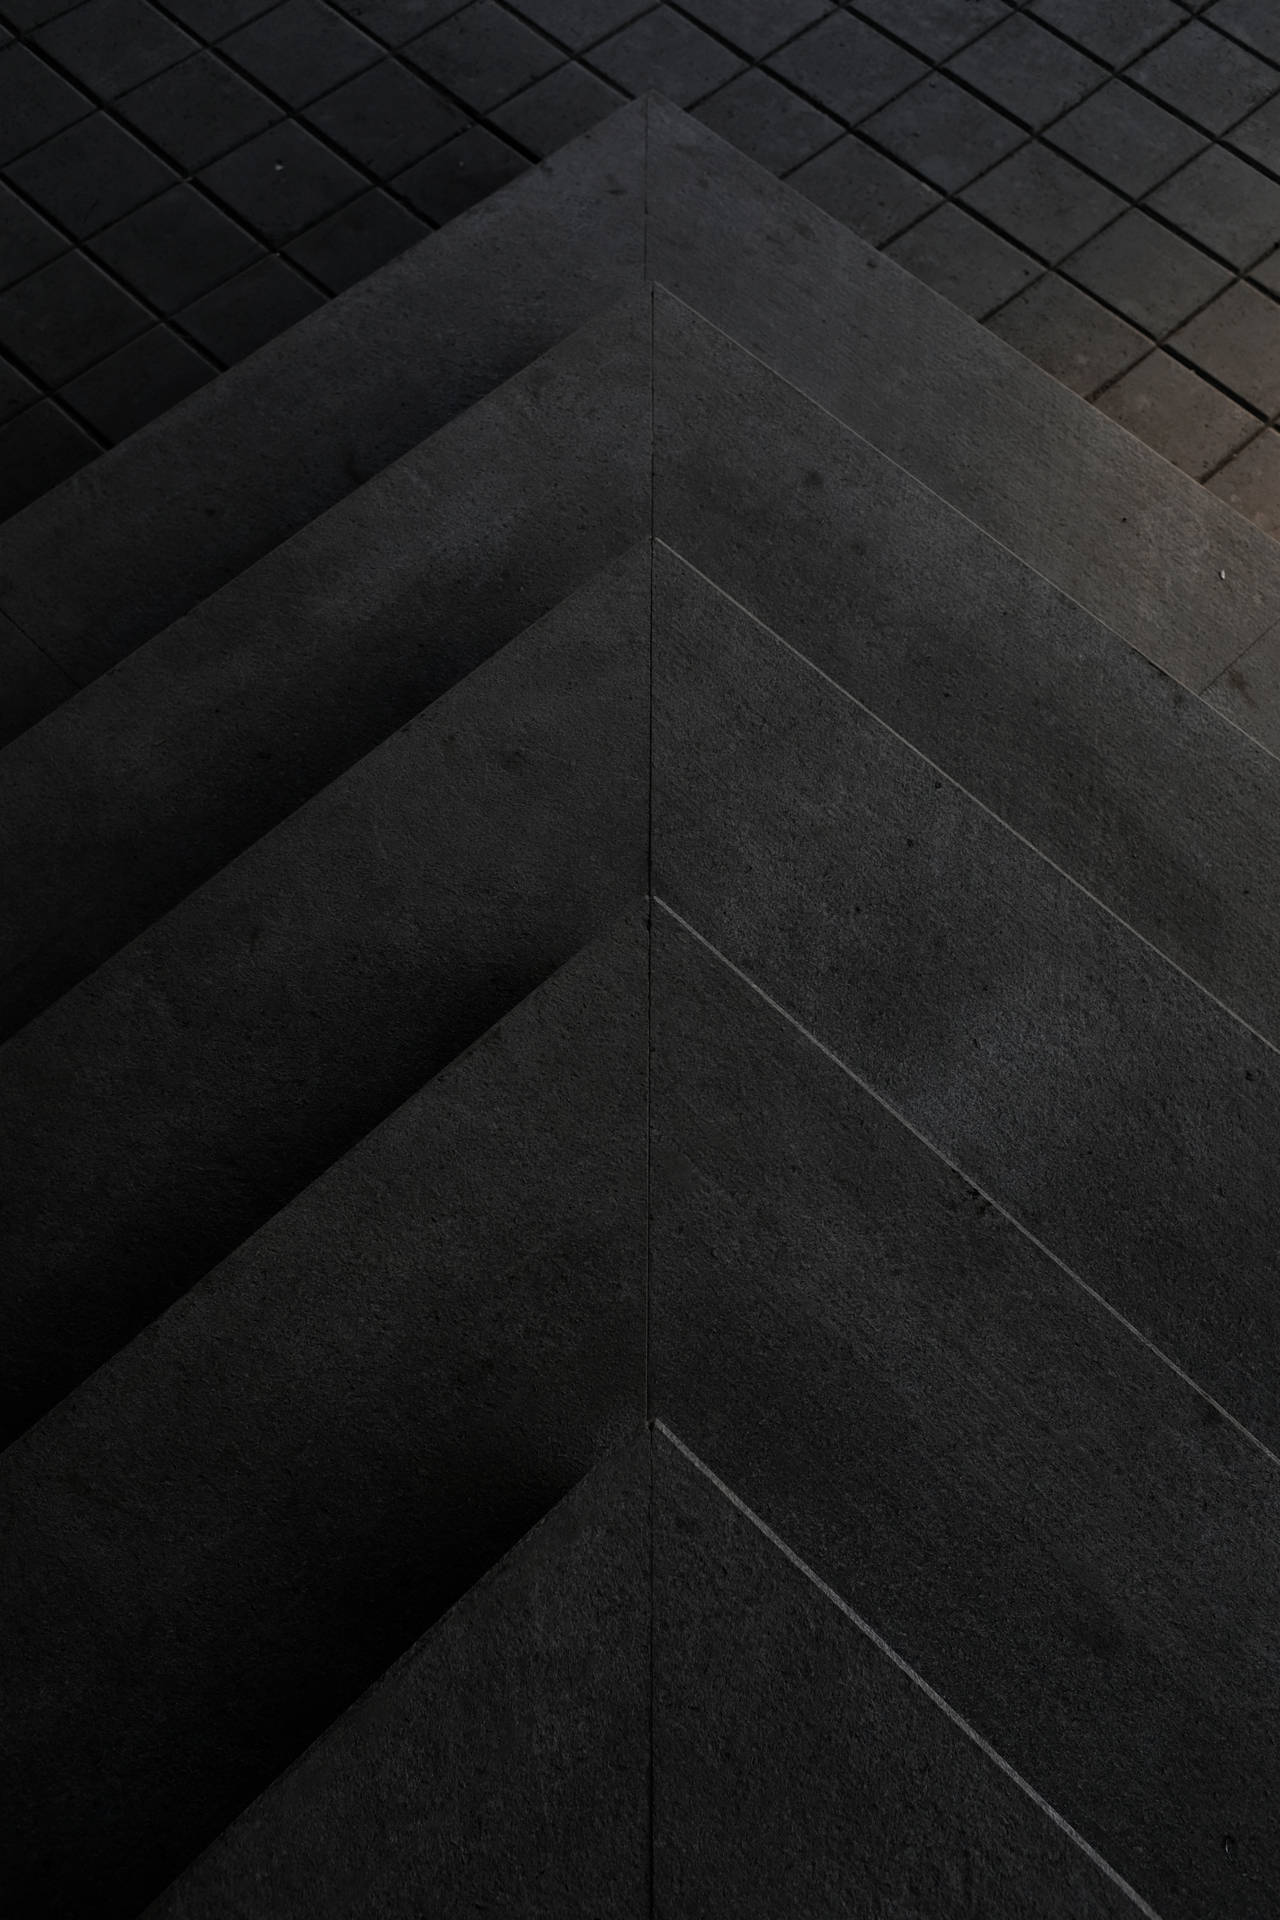 Triangular Concrete Black Abstract Background